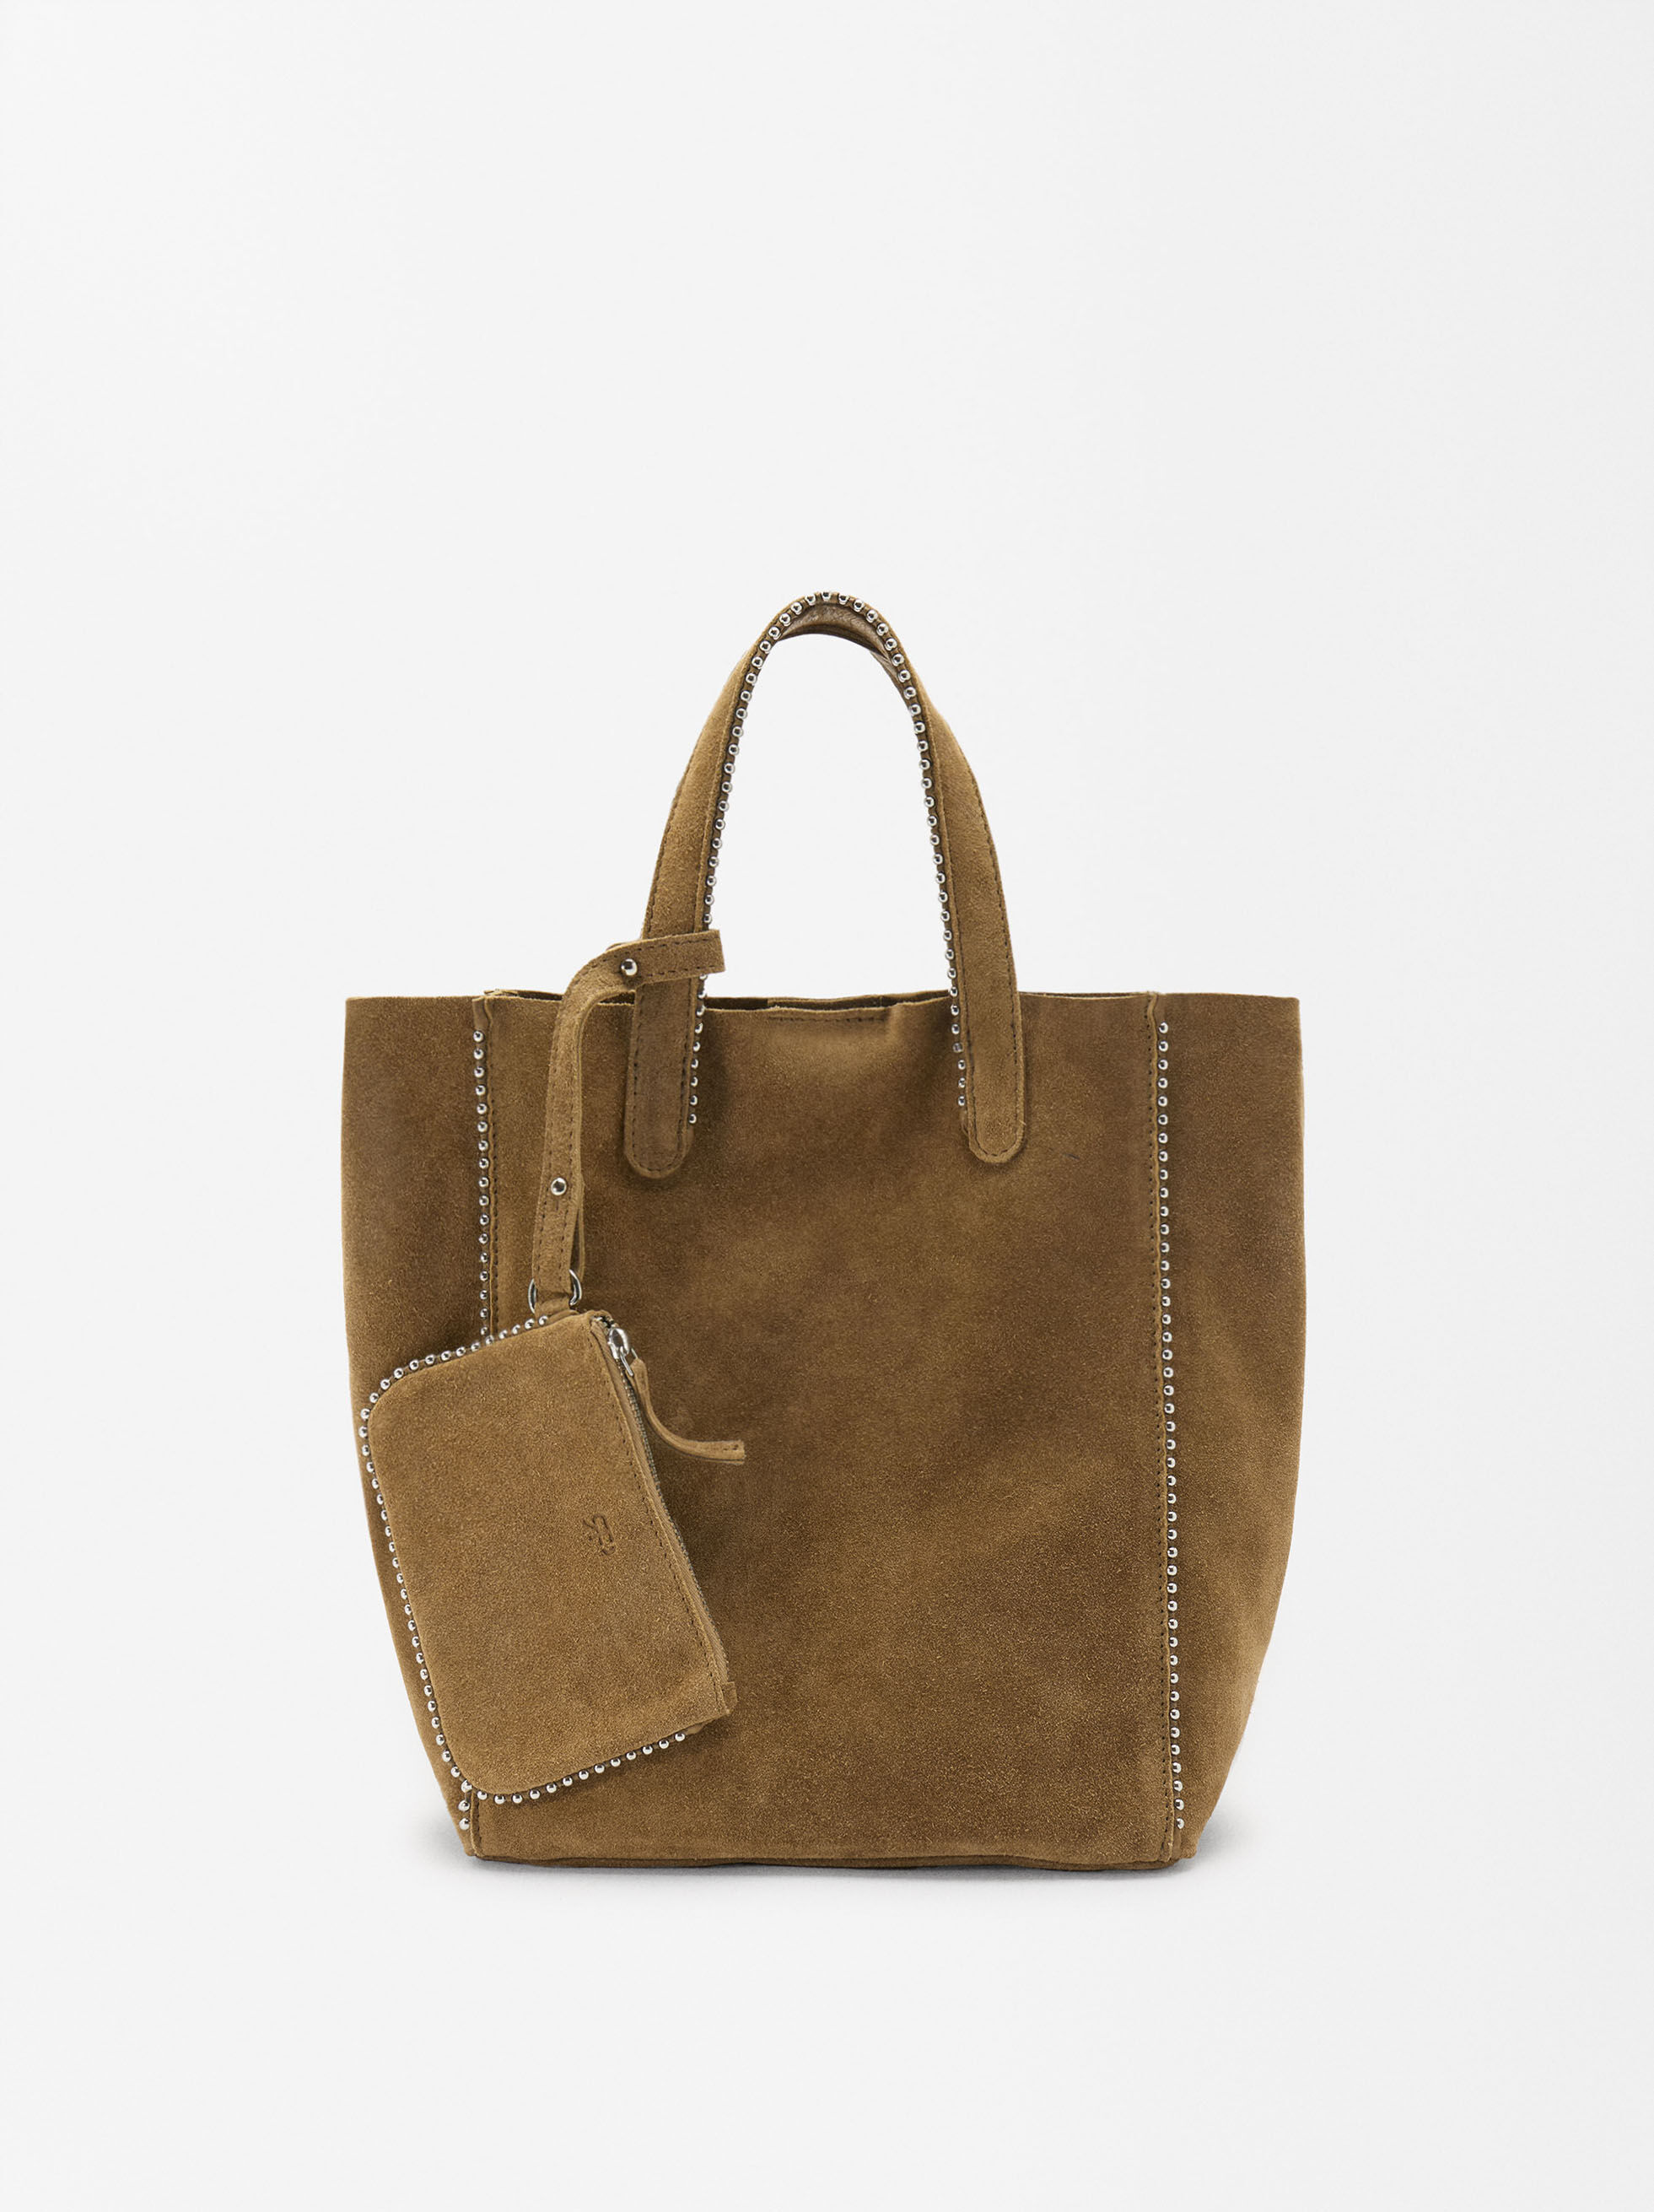 Women's Bags - Handbags, Tote Bags & More | Calvin Klein®